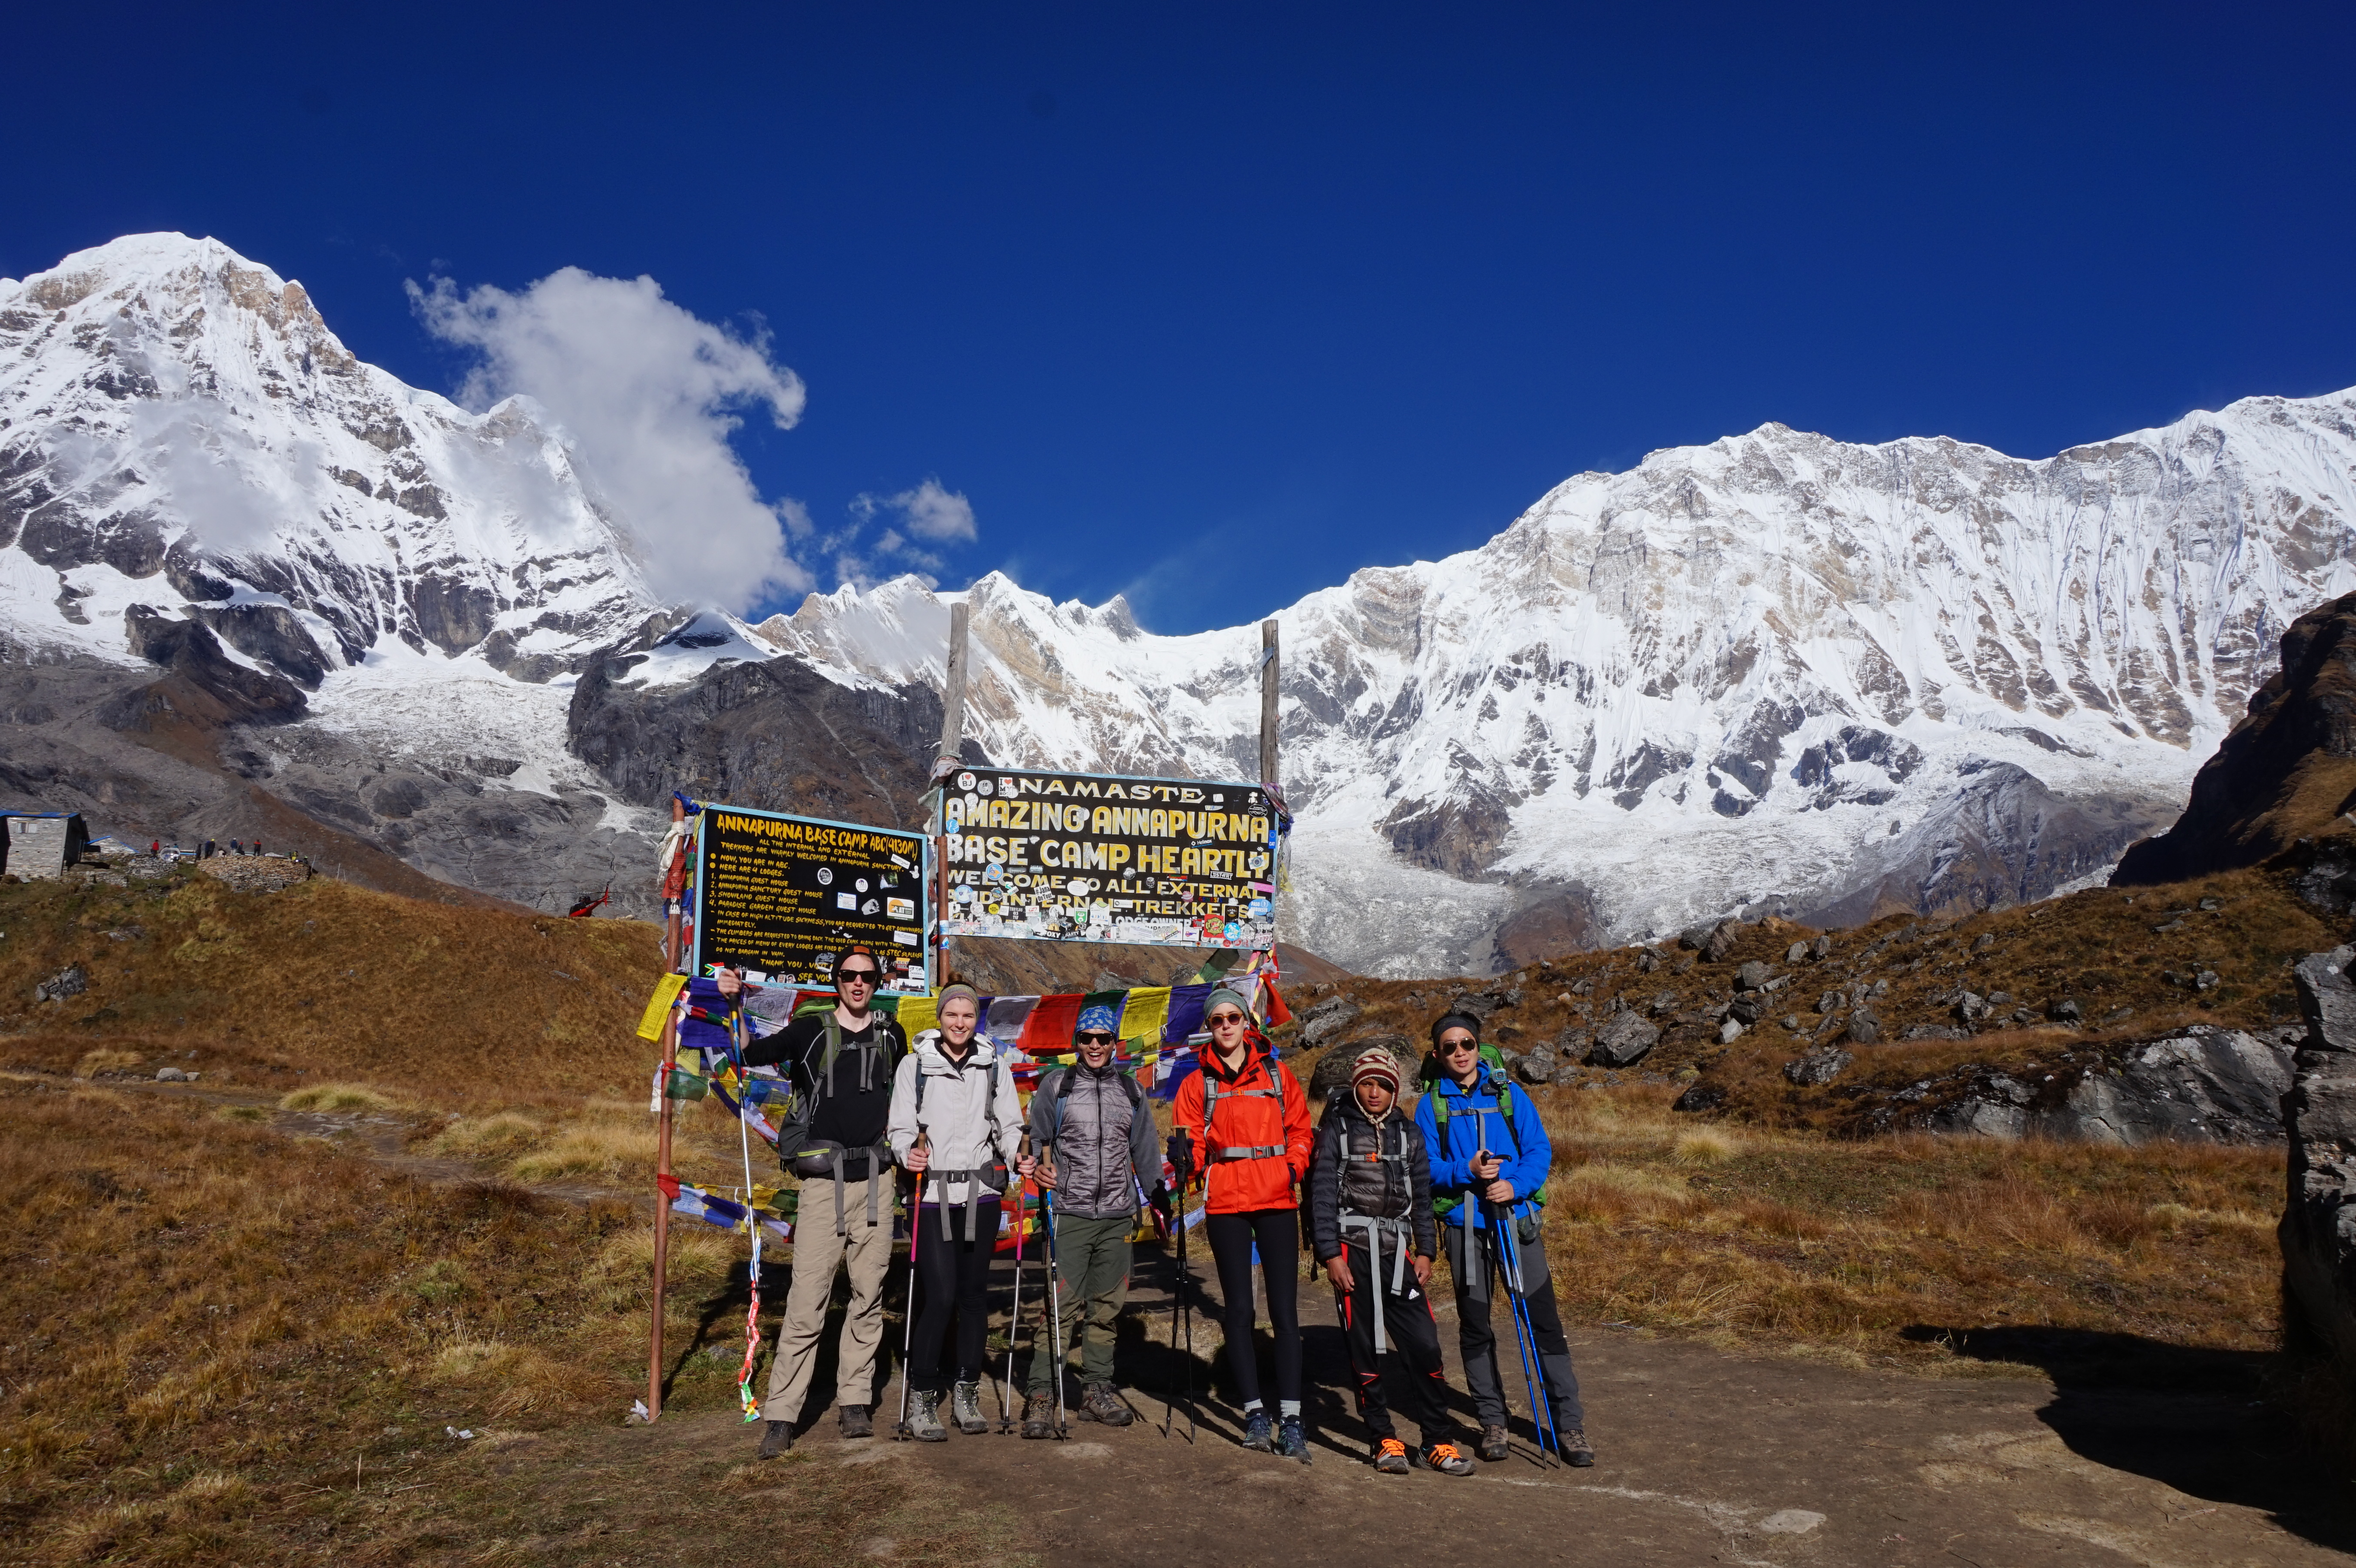 Annapurna Base Camp in 7 days